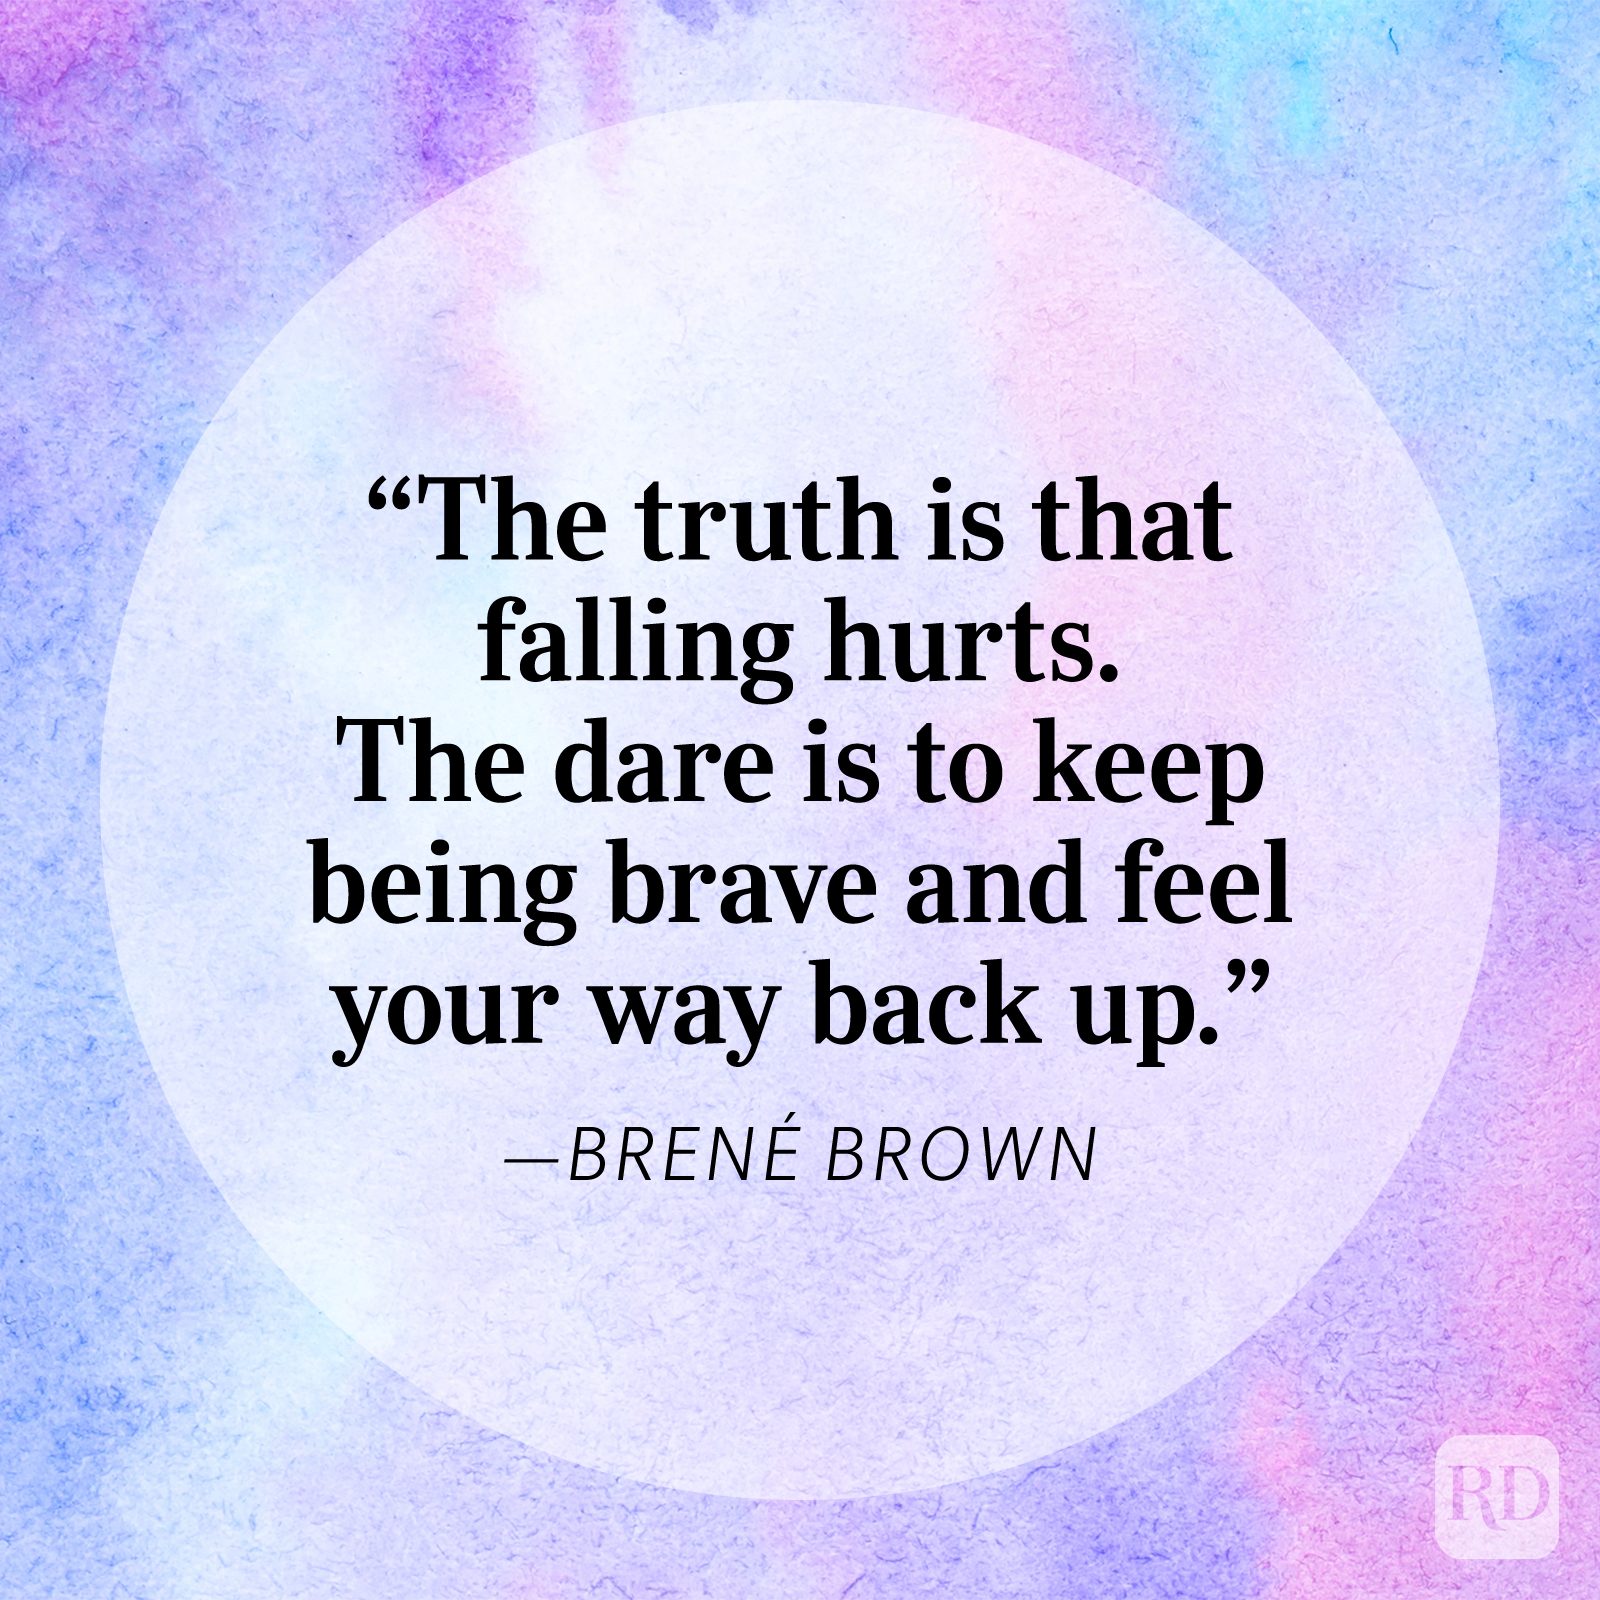 The Best Definition of Empathy We've Heard - Brené Brown